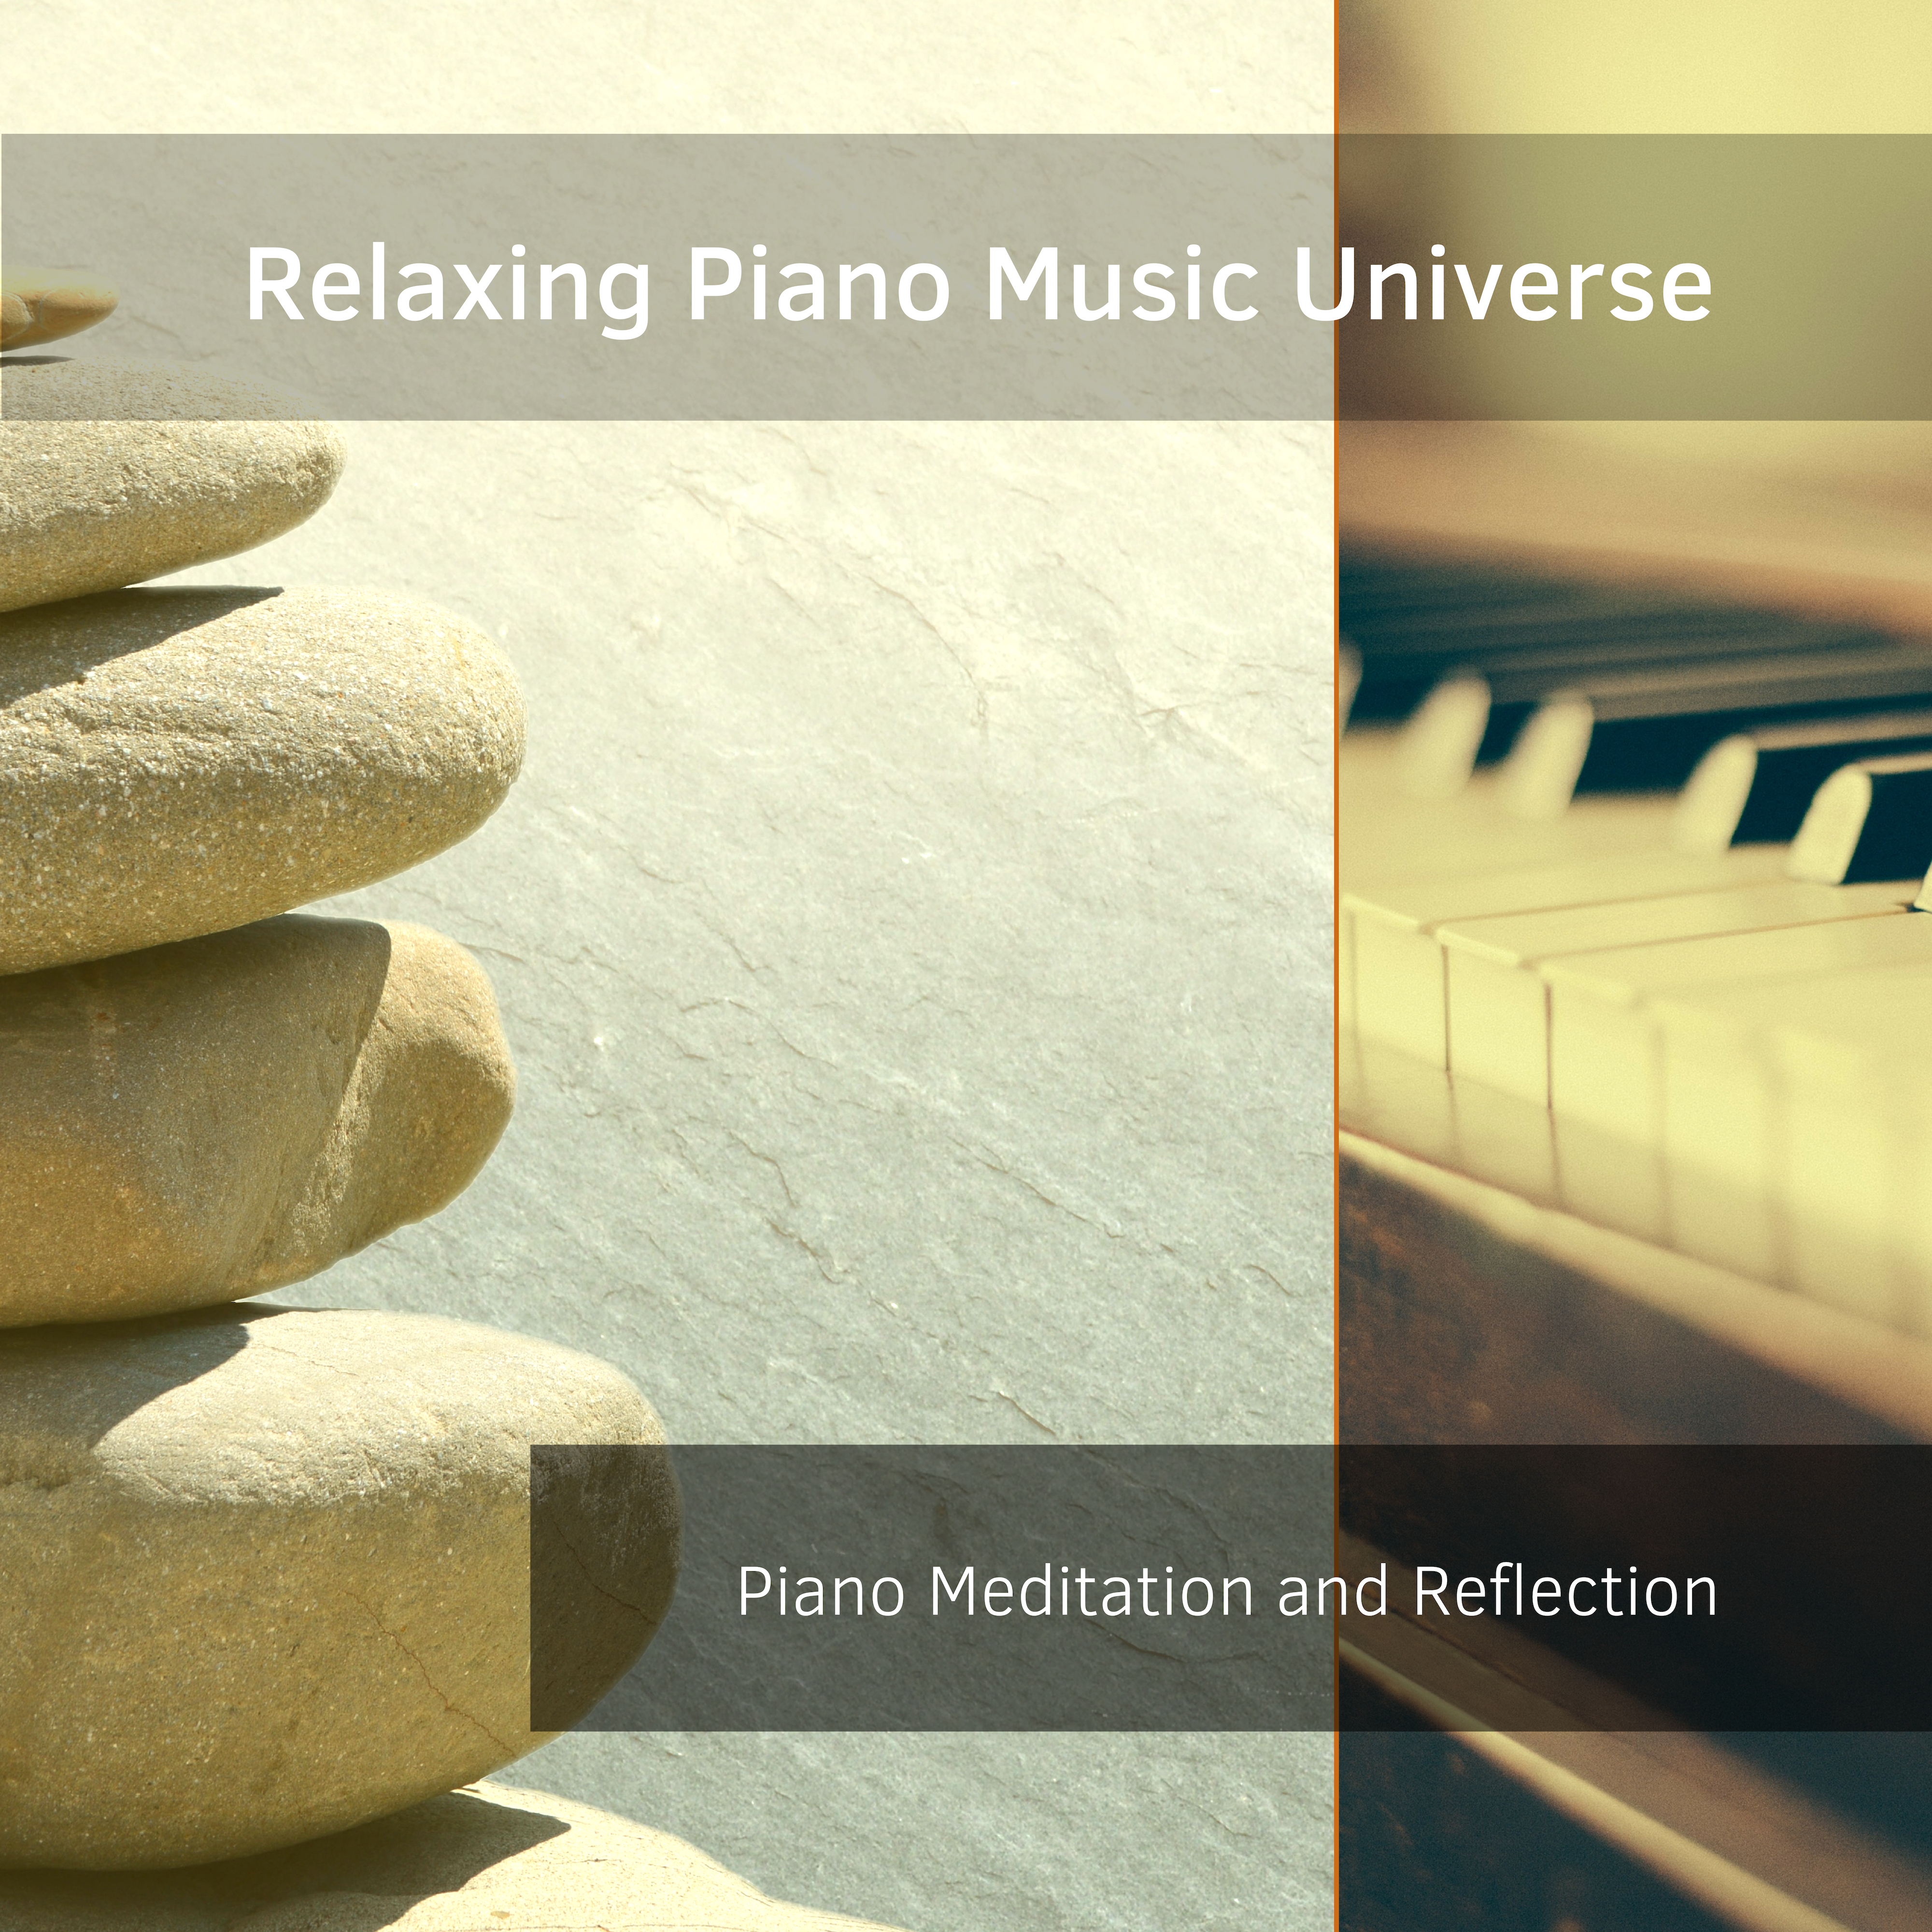 Piano Meditation and Reflection